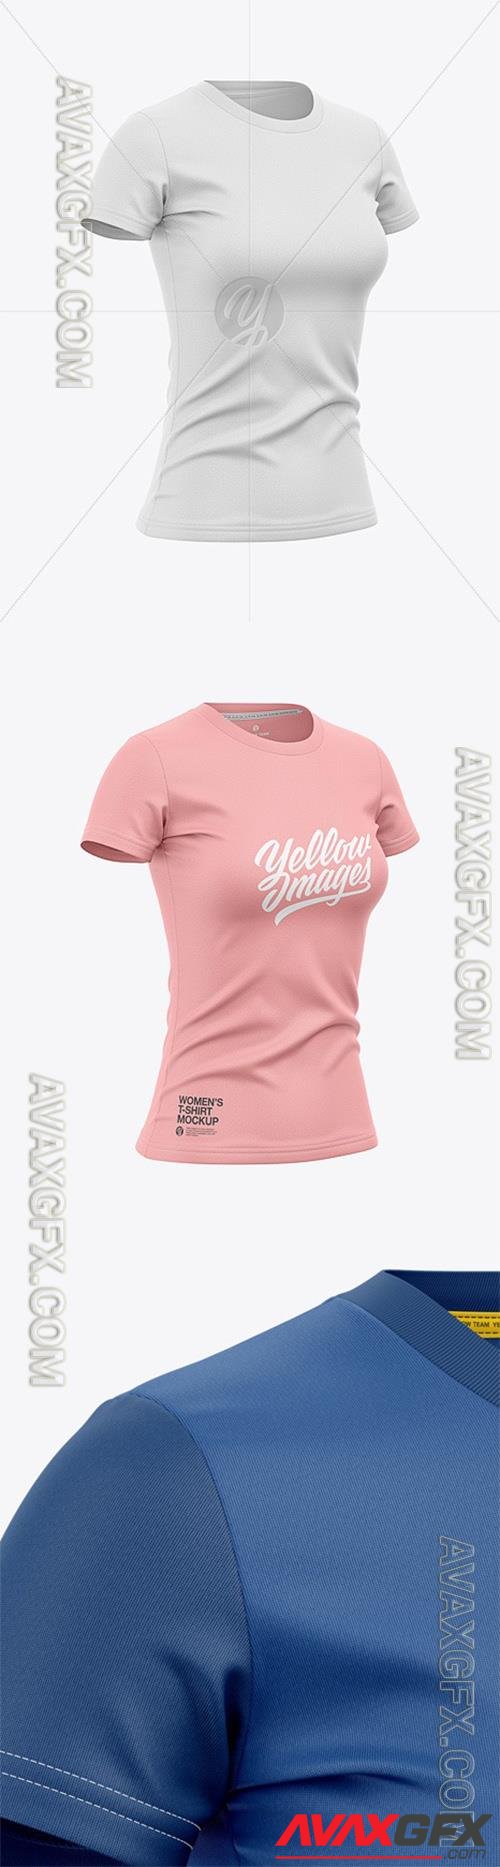 Women's T-Shirt Mockup 96221